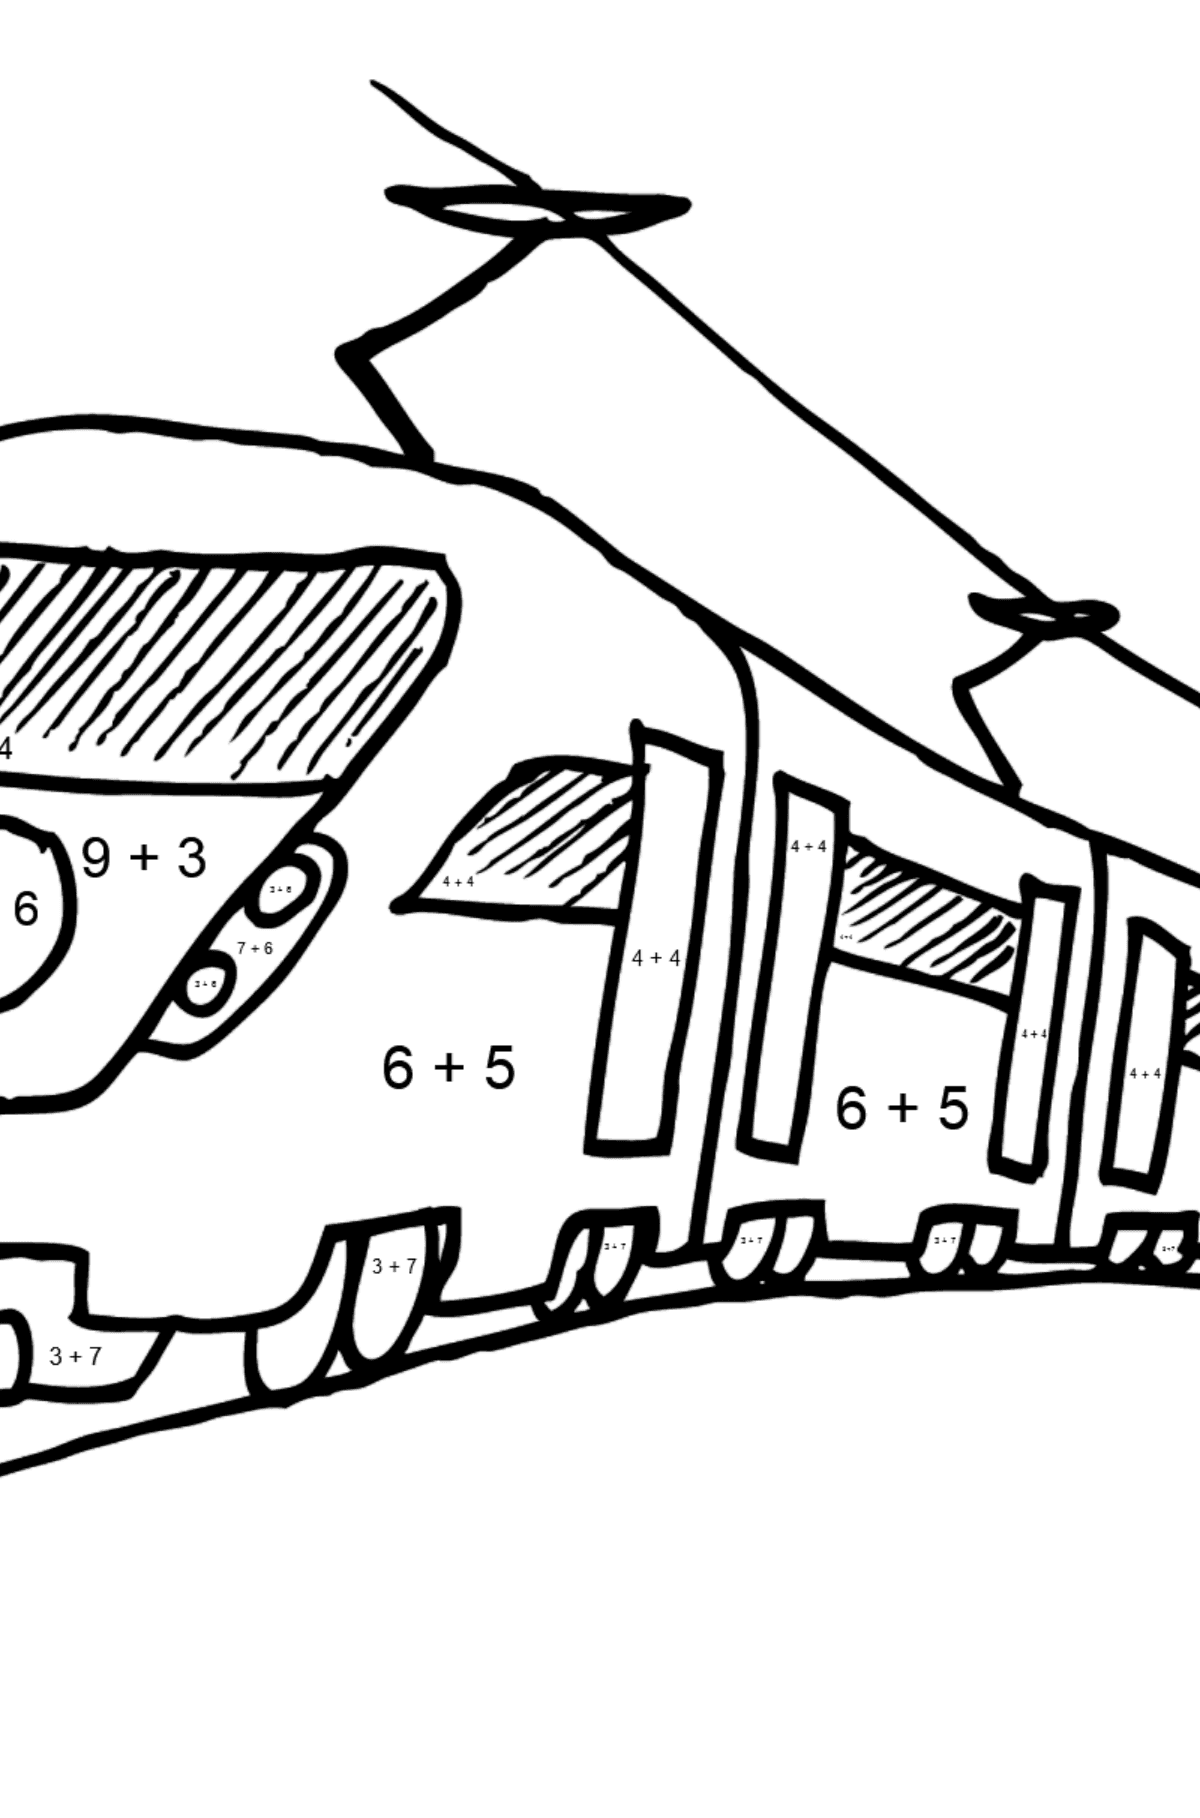 Dibujo para Colorear de Tren de Pasajeros - Colorear con Matemáticas - Sumas para Niños